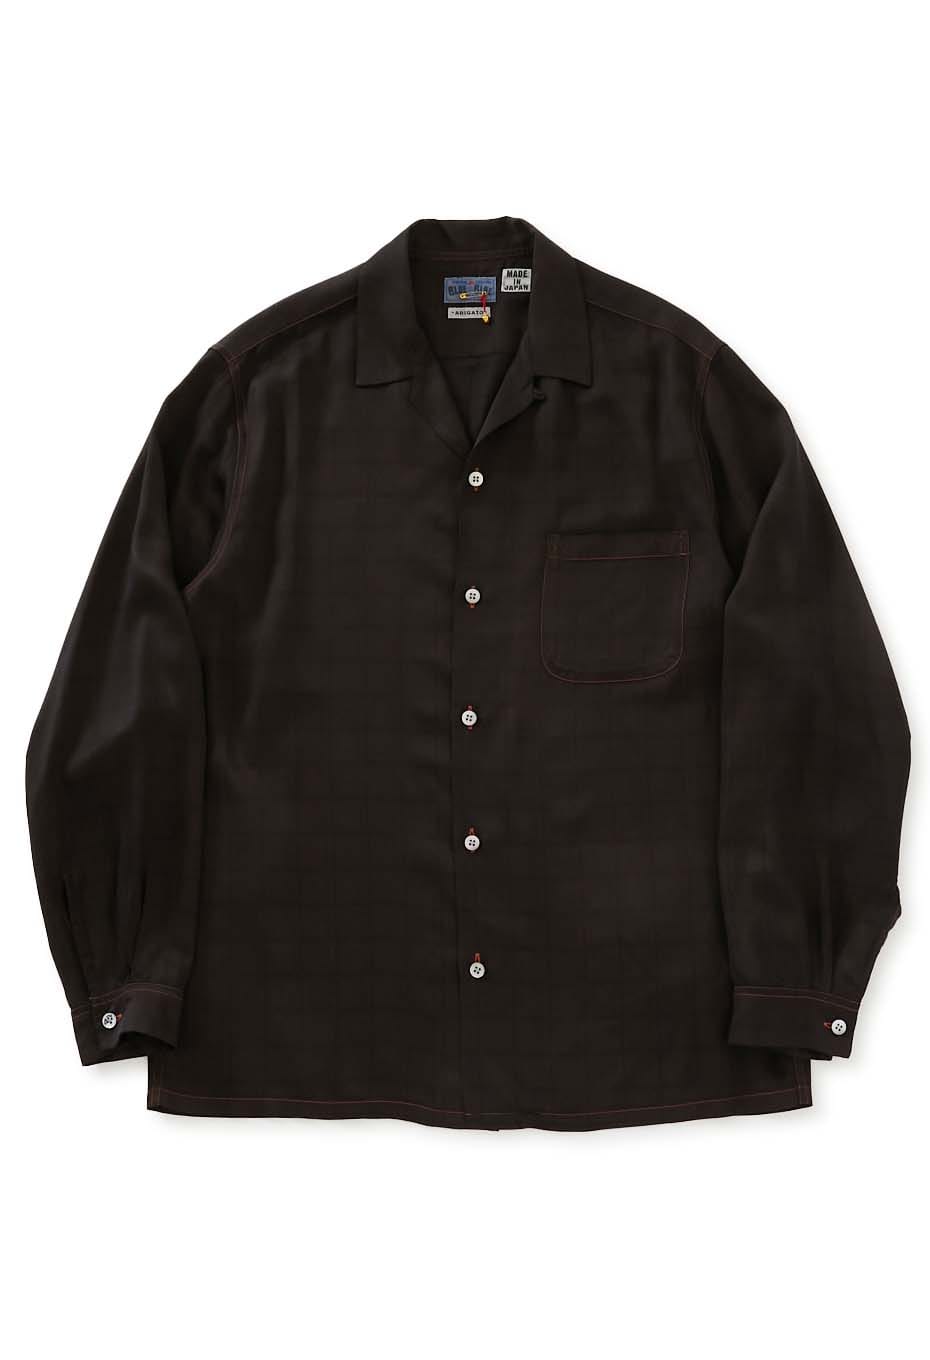 REWORK Black-spotted Square Collar Shirt